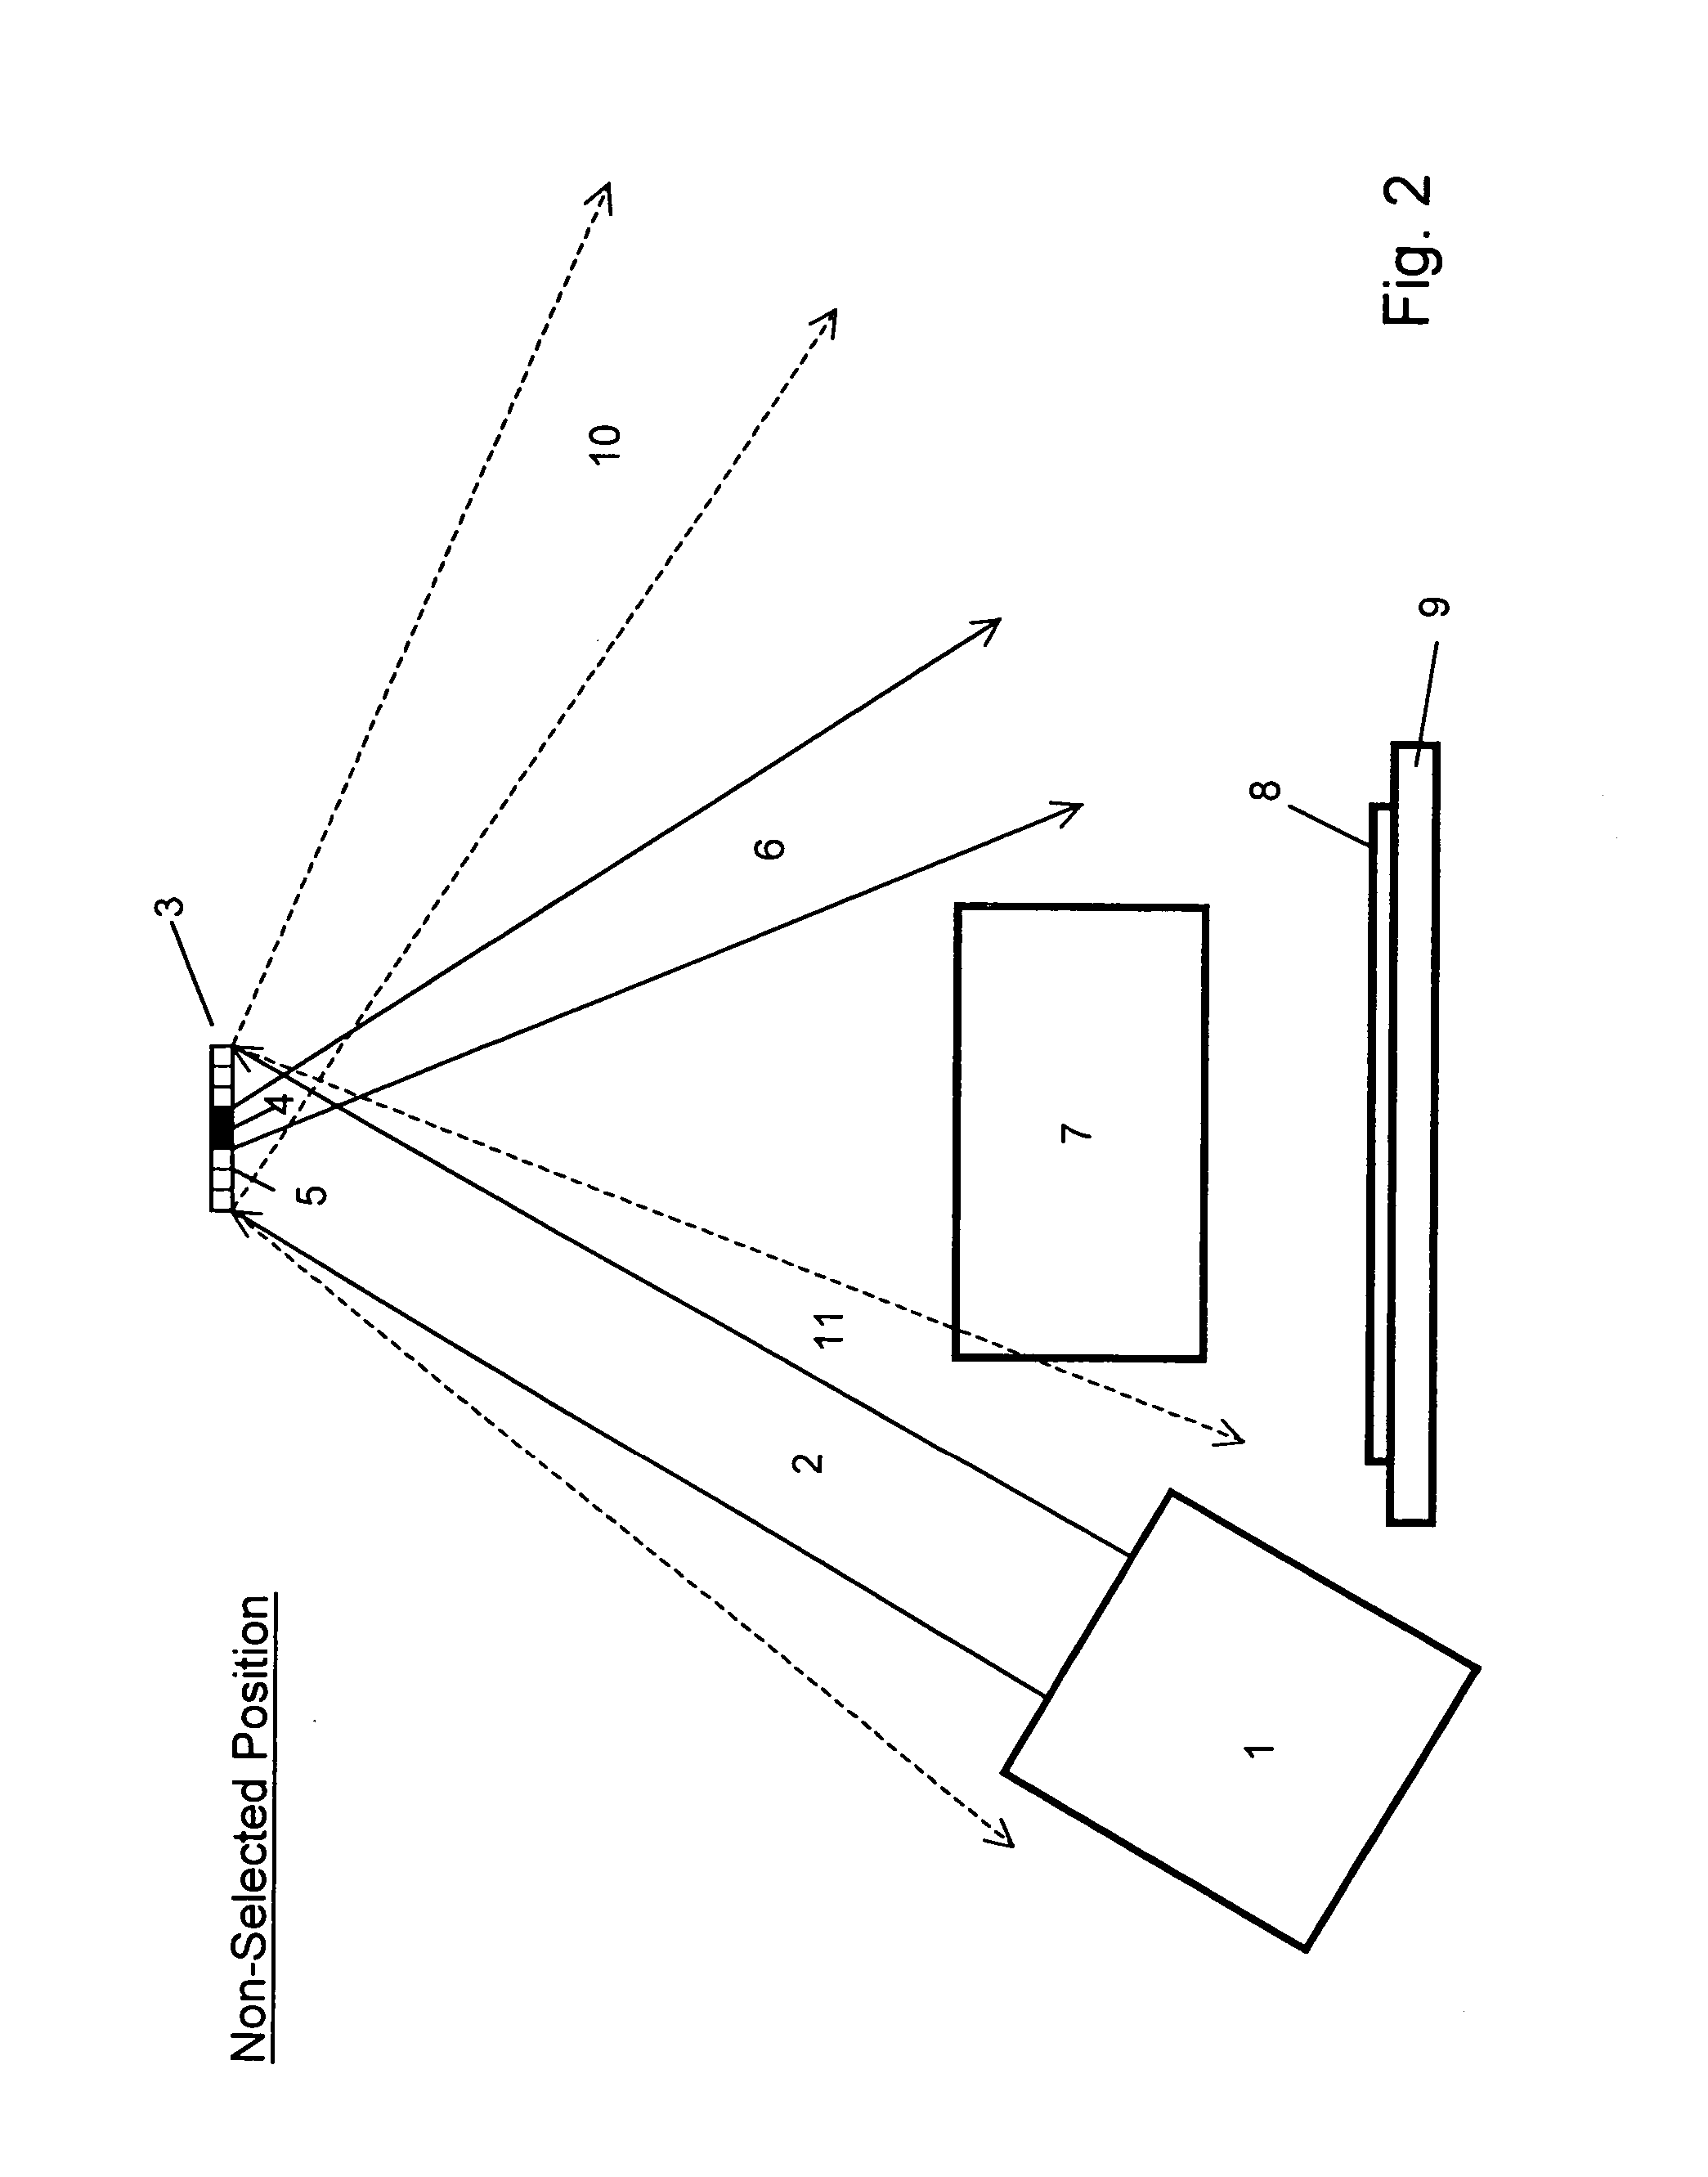 Spatial light modulator features